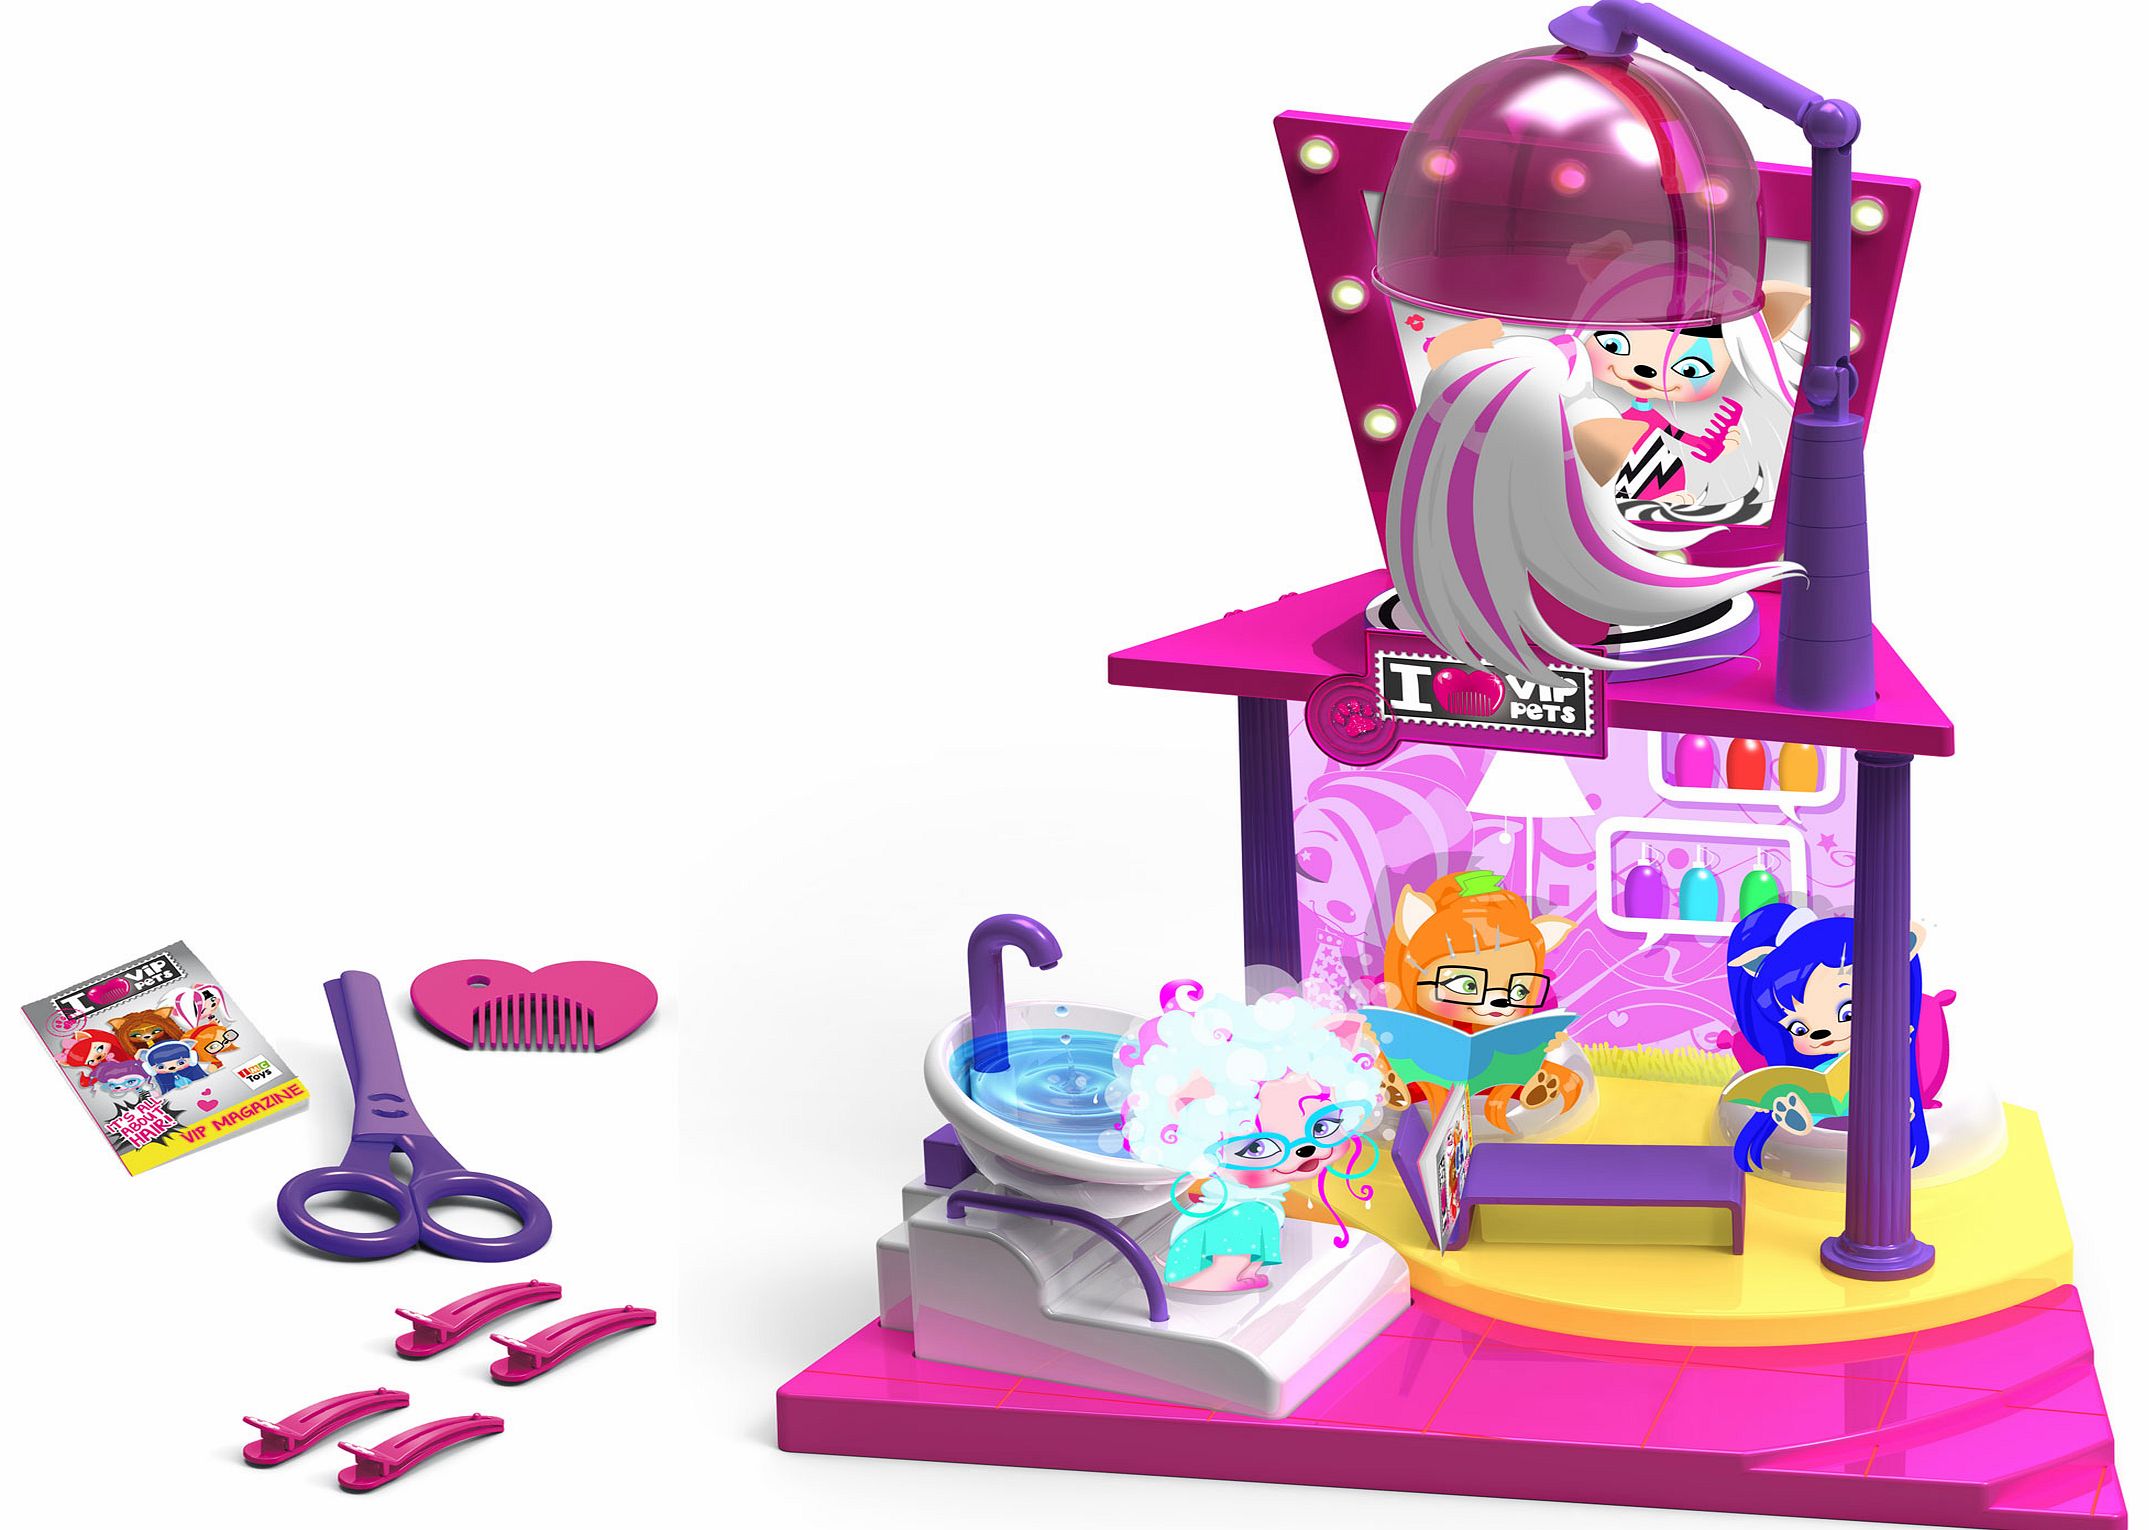 IMC Toys VIP Pets Playset